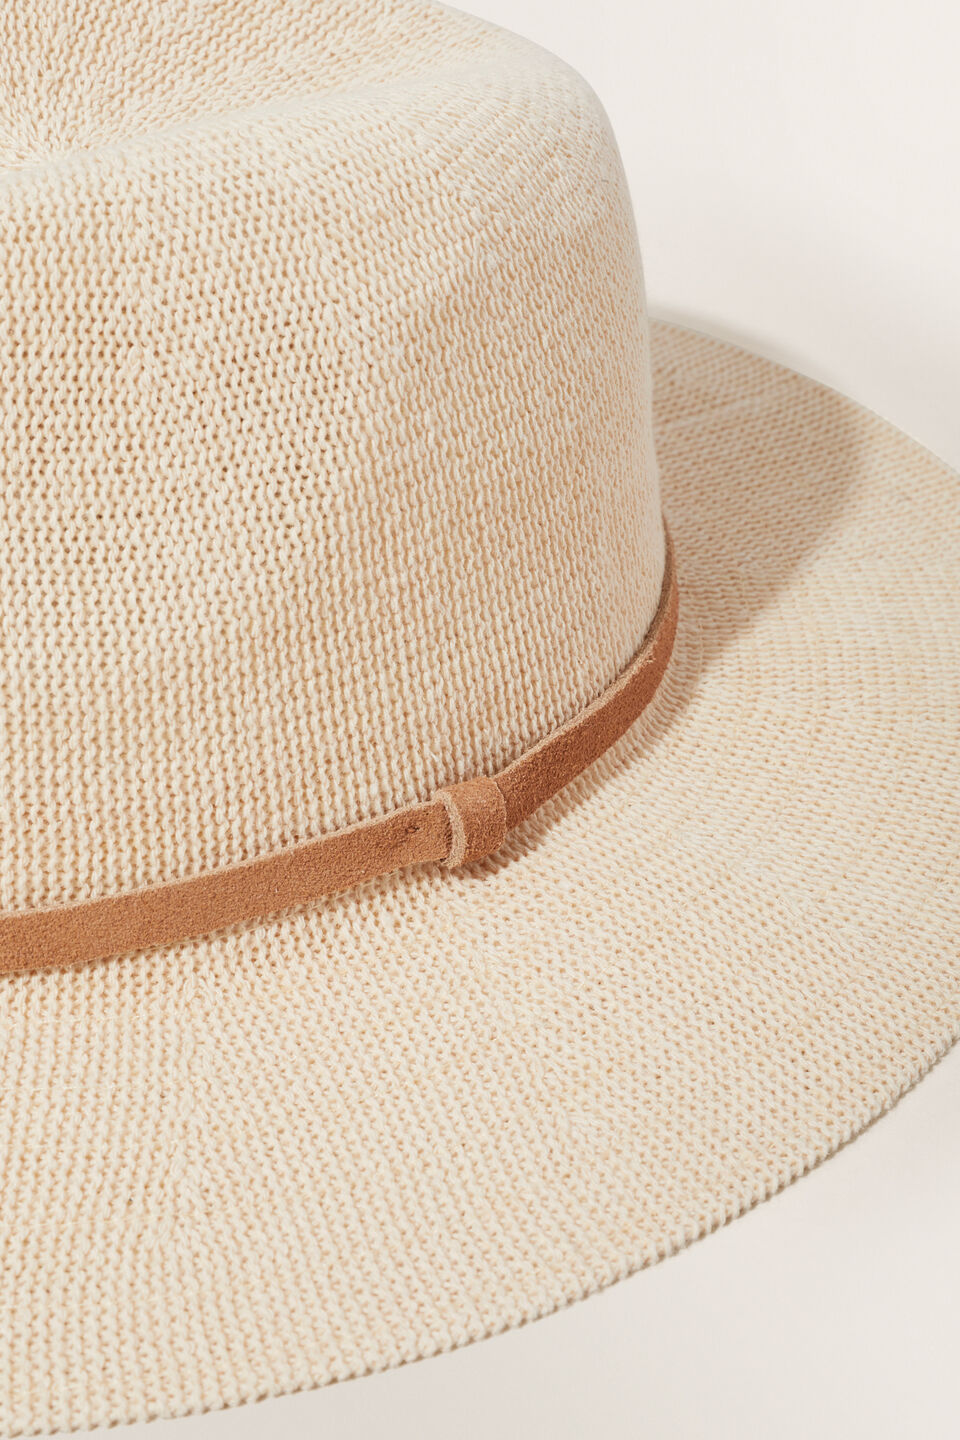 Lightweight Panama Hat  Natural Tan